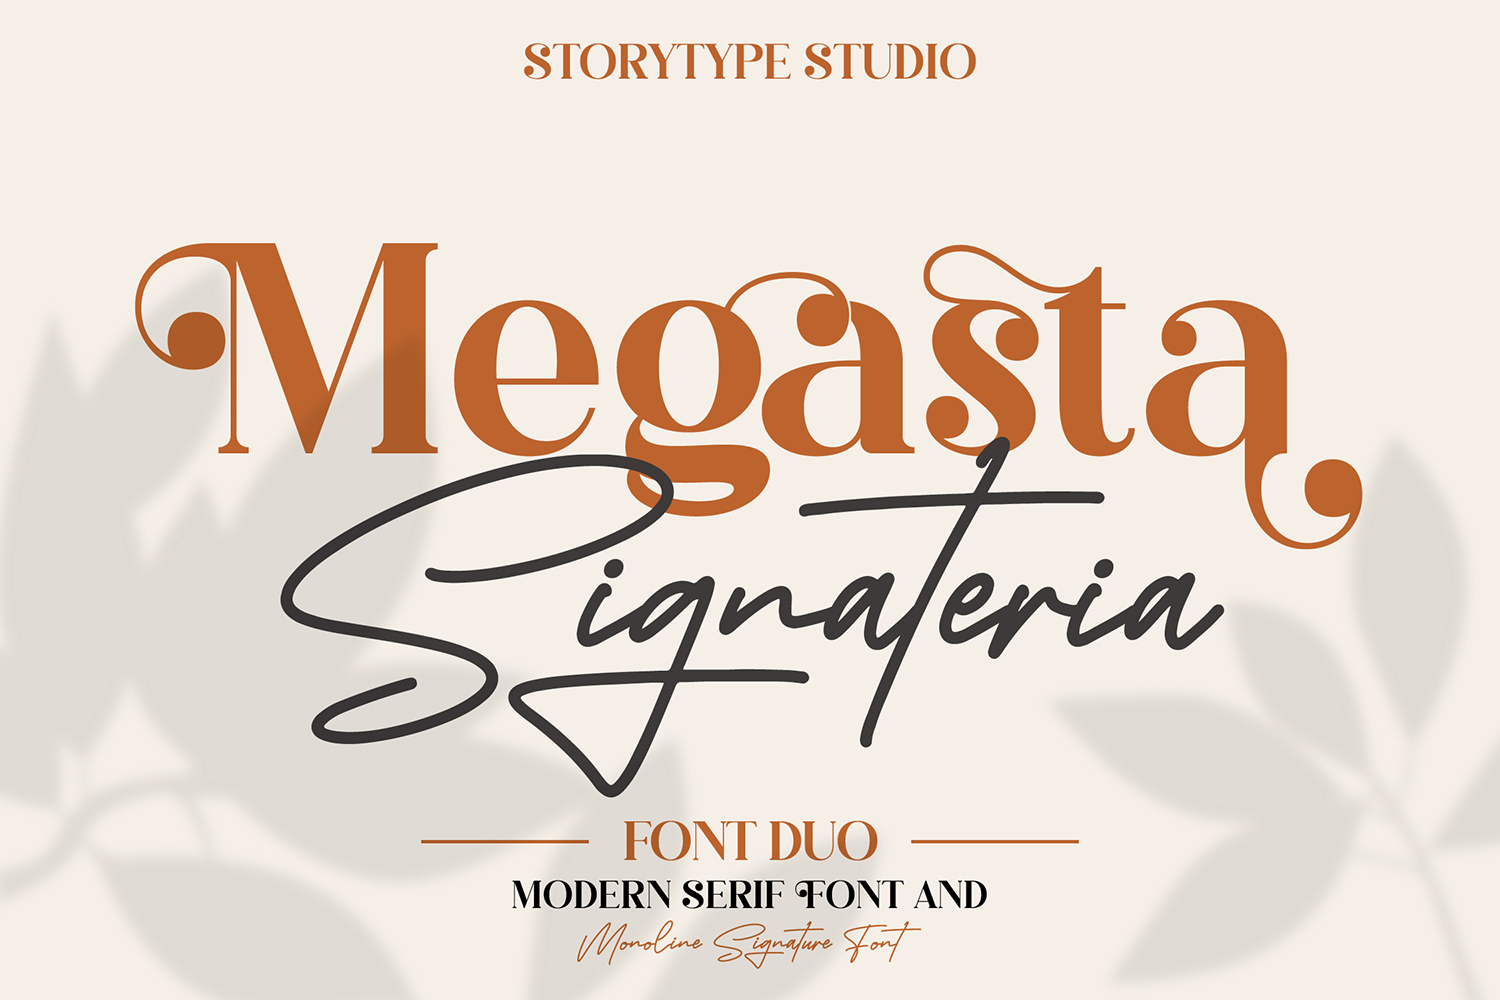 Megasta Signateria Free Font